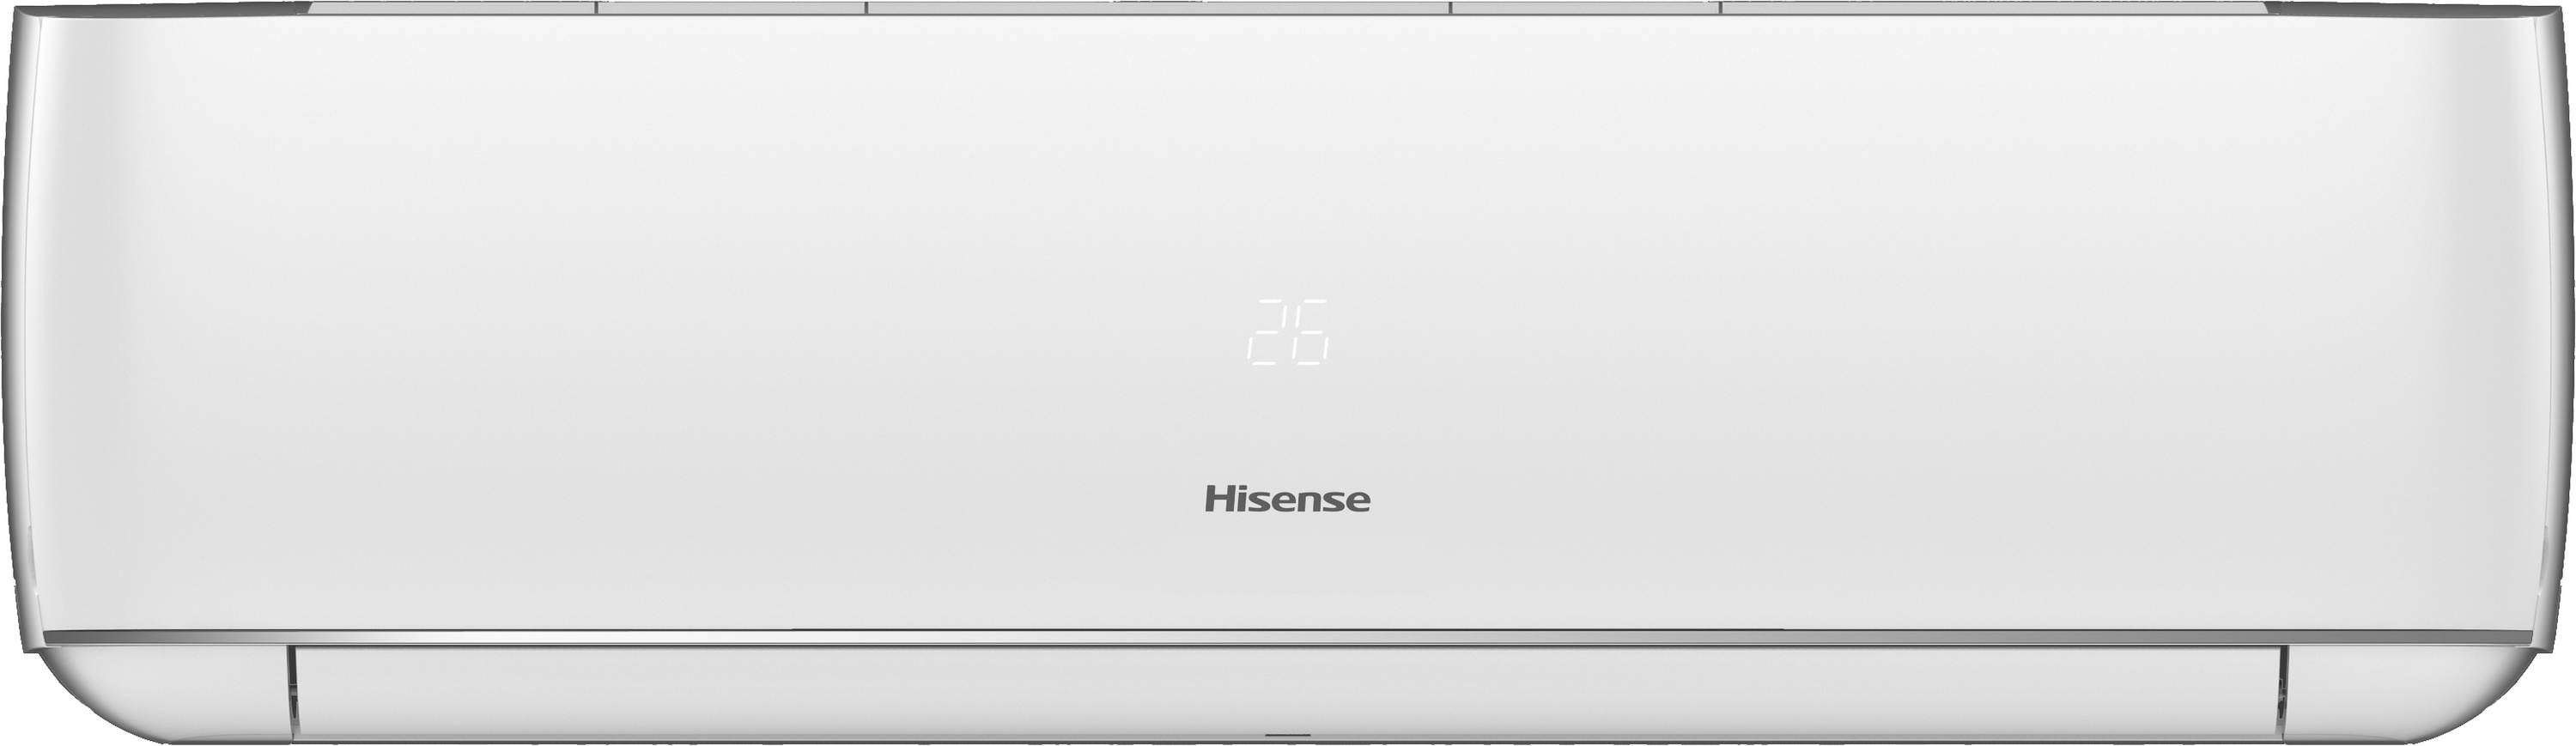 Кондиционер сплит-система Hisense Husky TV35XE0E цена 0.00 грн - фотография 2